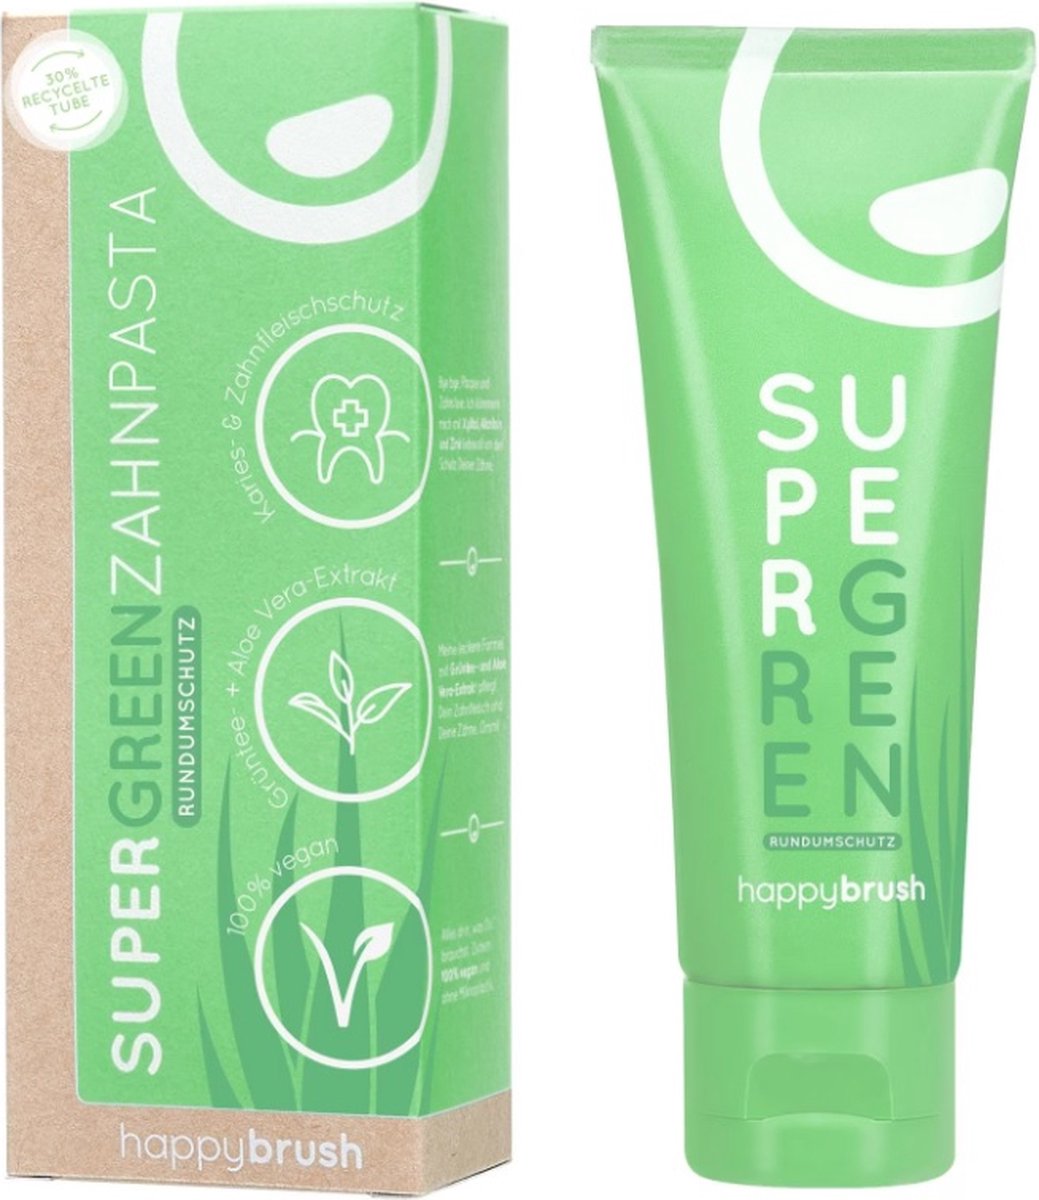 Happybrush Super Green tandpasta 75 ml - Met groene thee extract en aloë vera - Anti-tandplak tandpasta - Anti tandplak - Happy Brush Supergreen Zahnpasta - Vegan